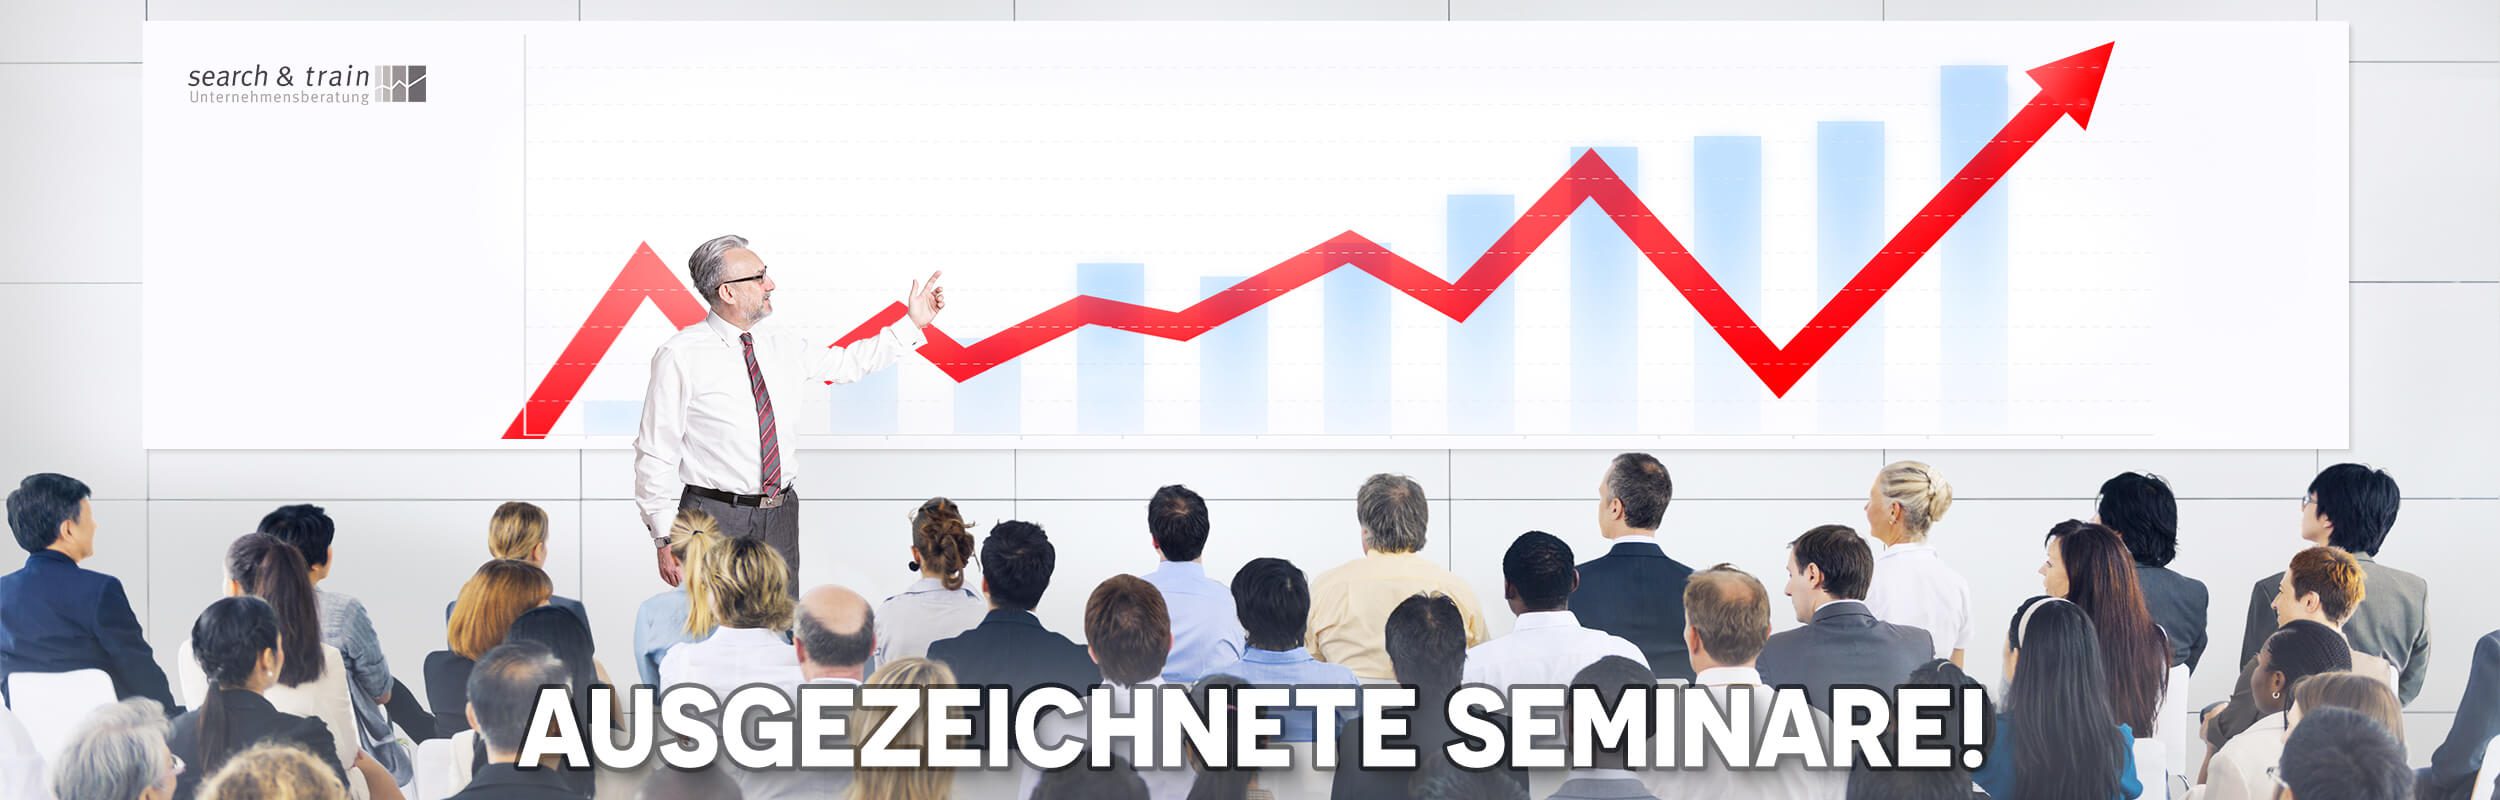 search & train - Ausgezeichnete - Seminare